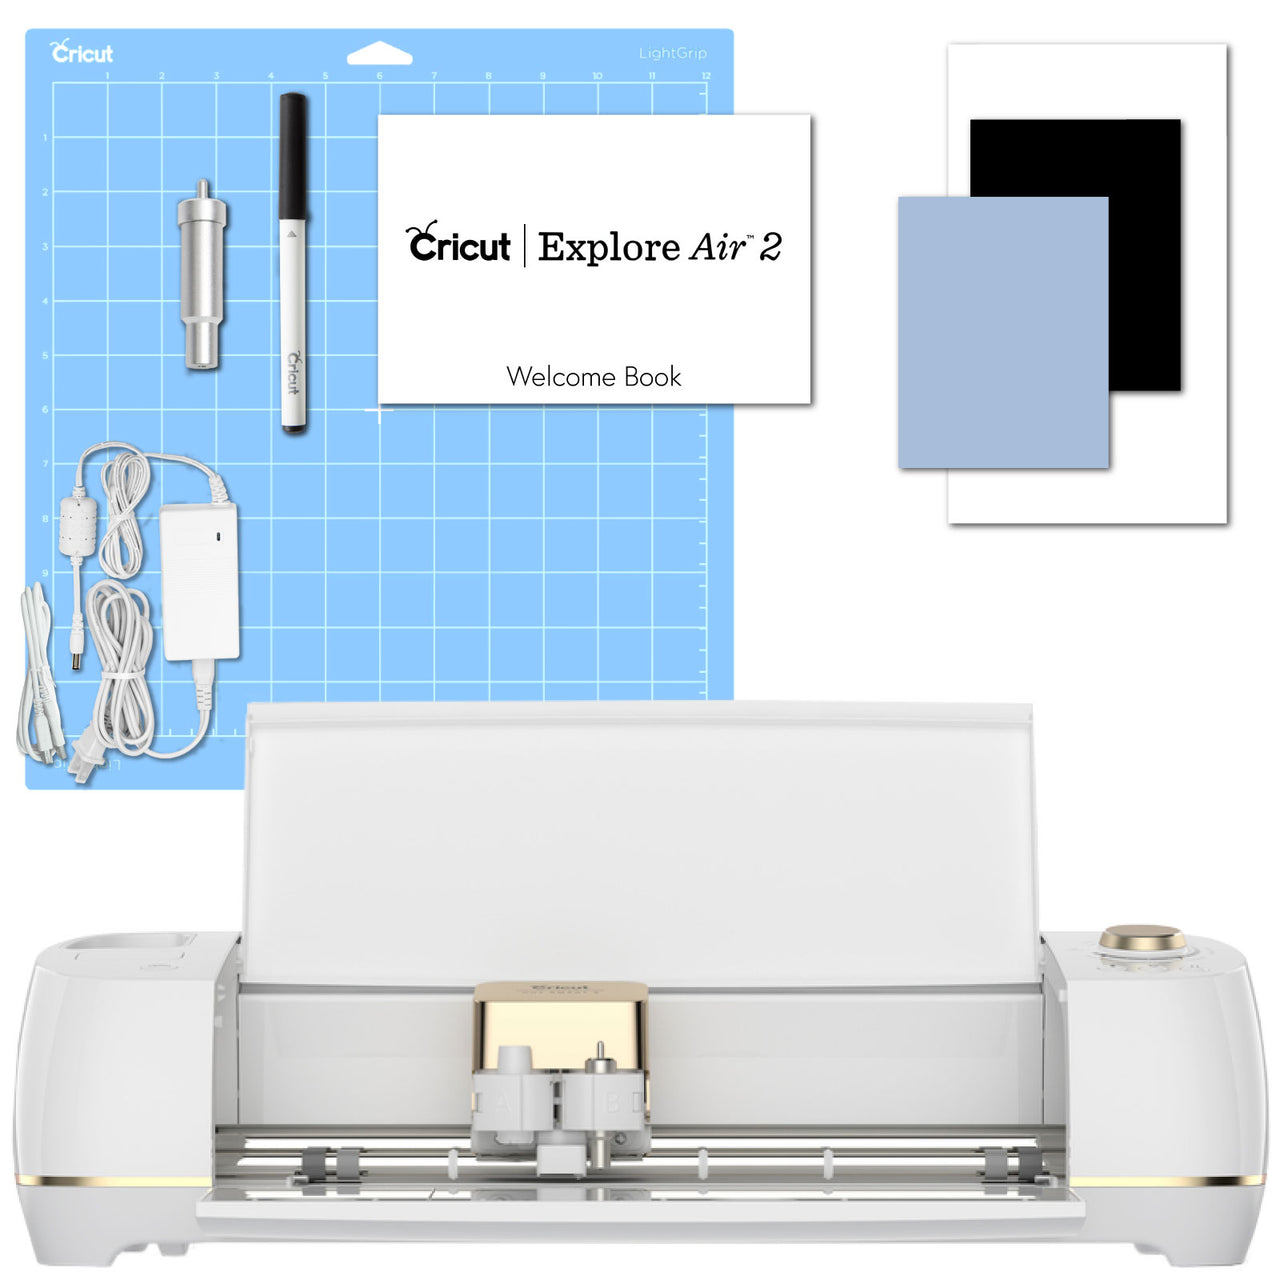 Cricut Explore Air 2 Machine in DayBreak  (White & Gold) - USED